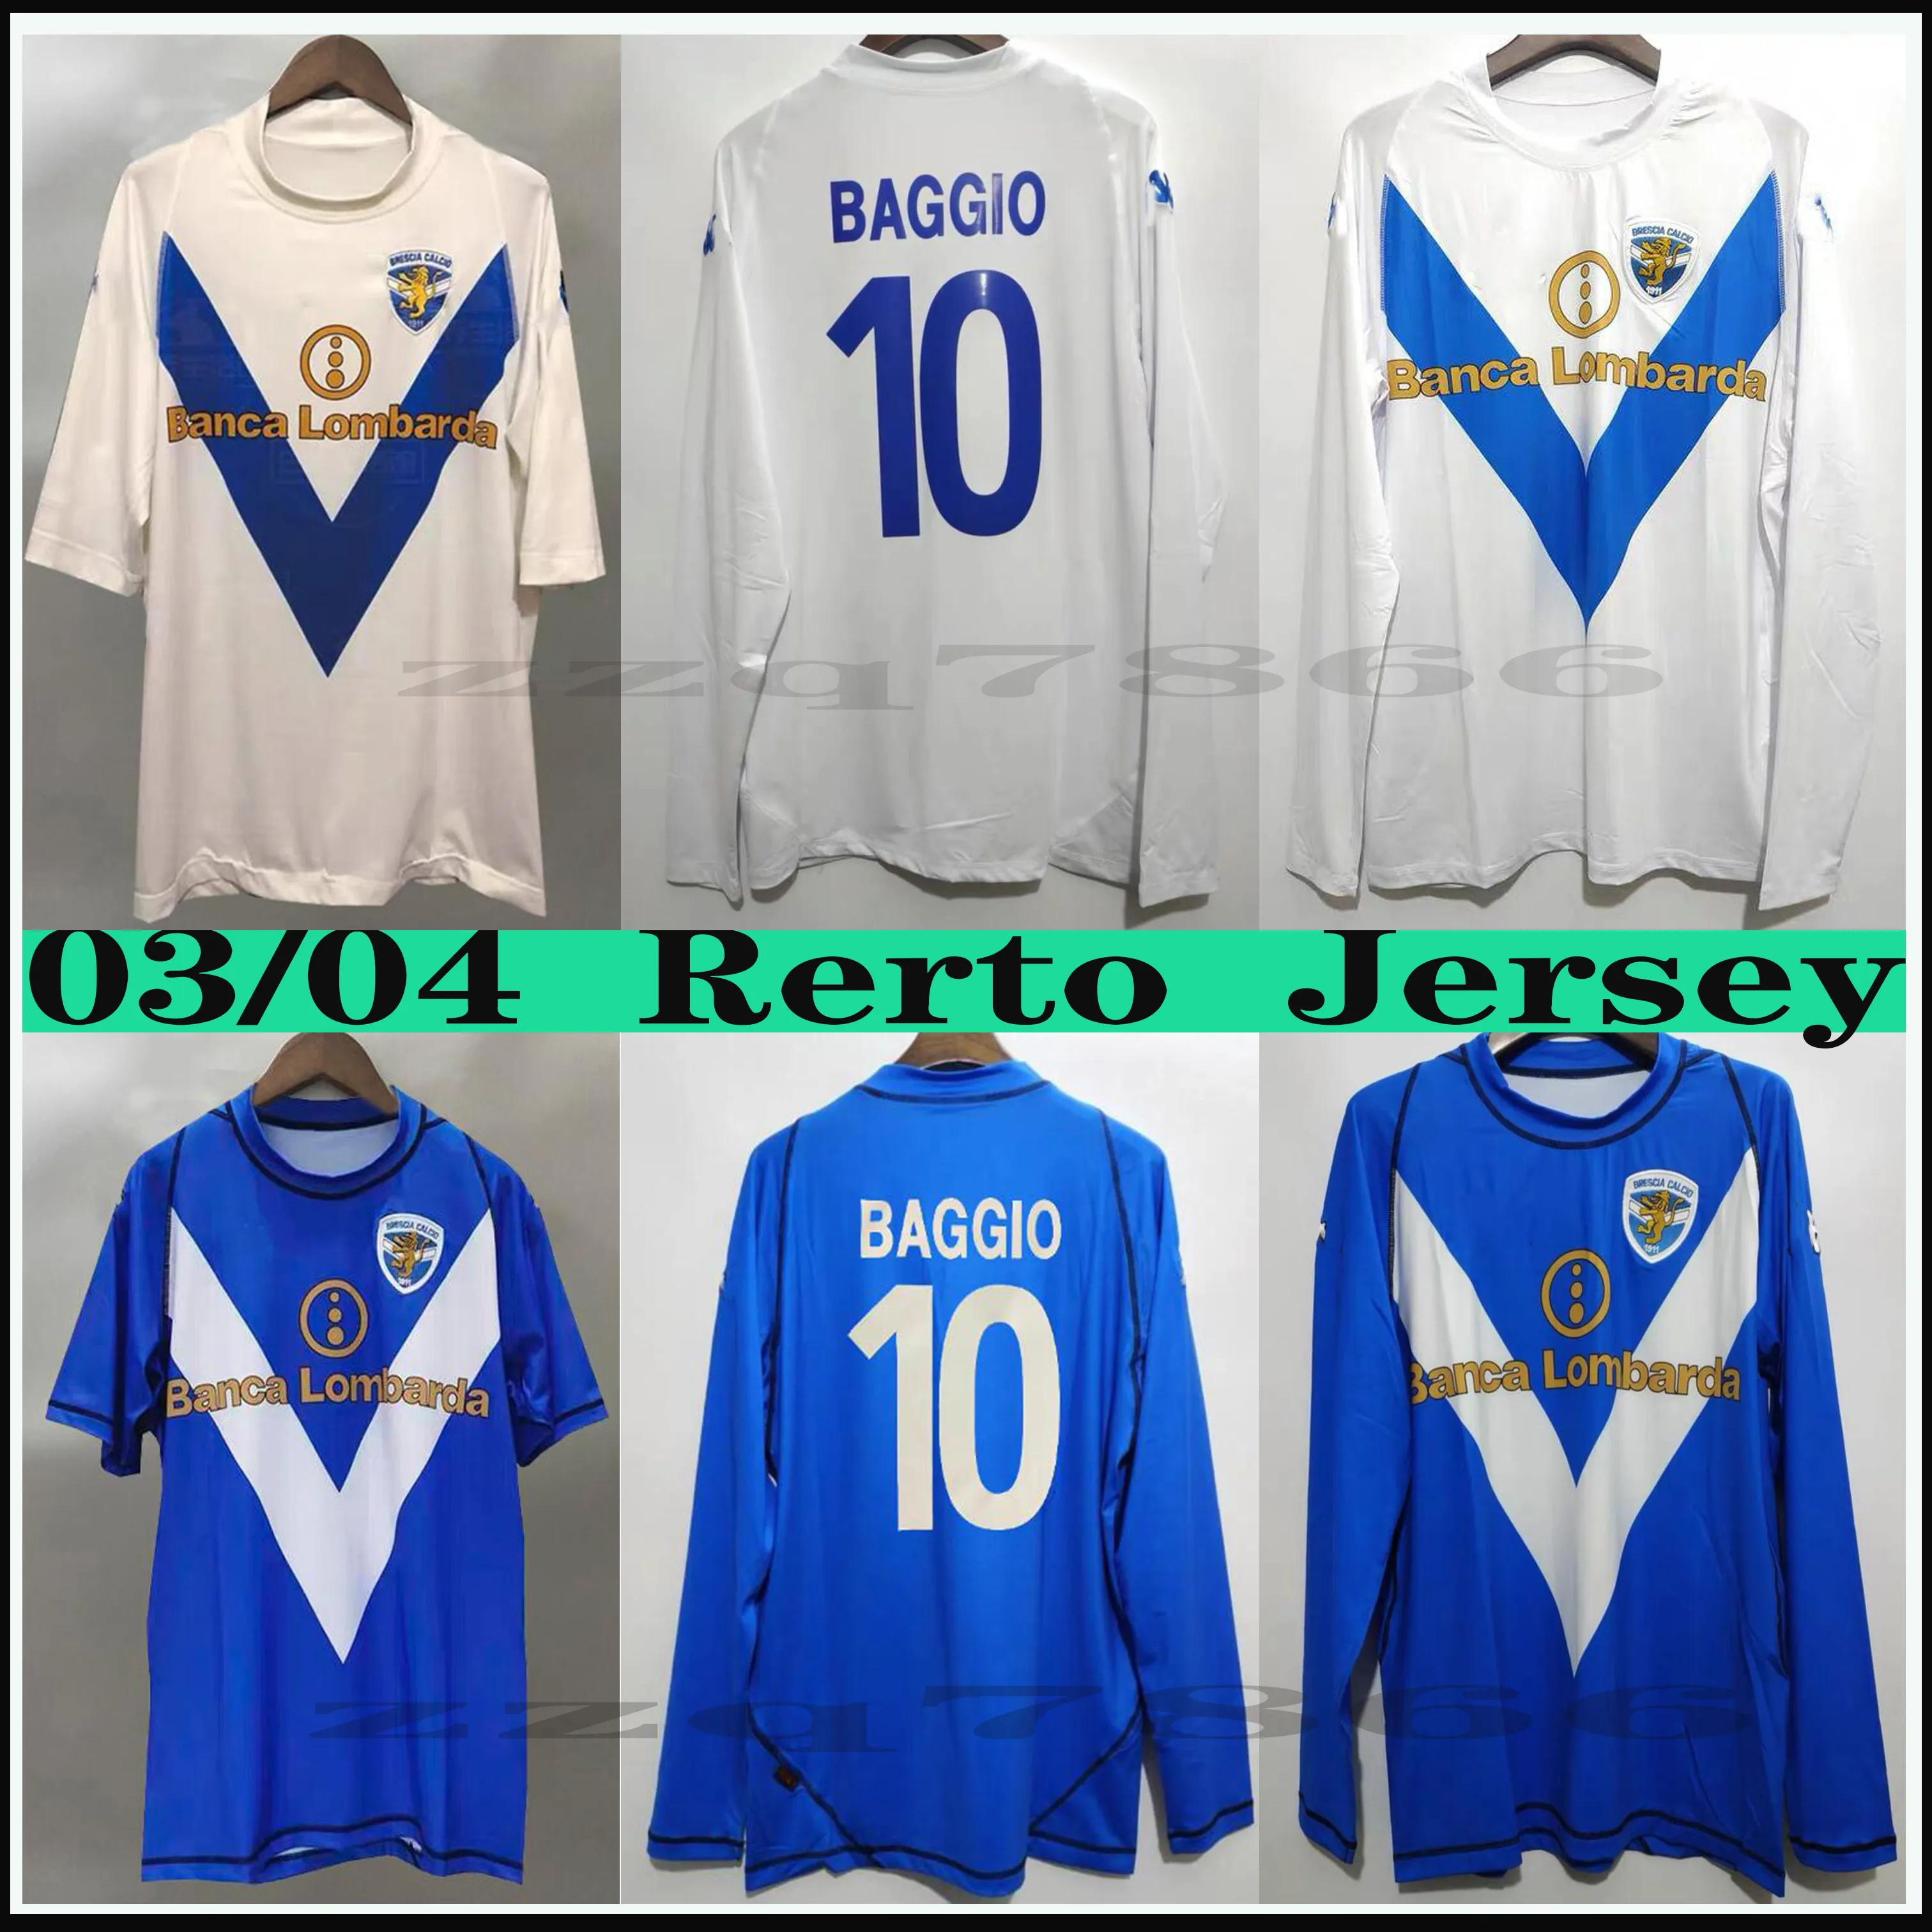 2003 2004 Brescia Baggio Pirlo Retro Футбольная майка Classic Vintage Calcio F.Aye Donnarumma Spalek Длинный рукав Короткие футбольные рубашки